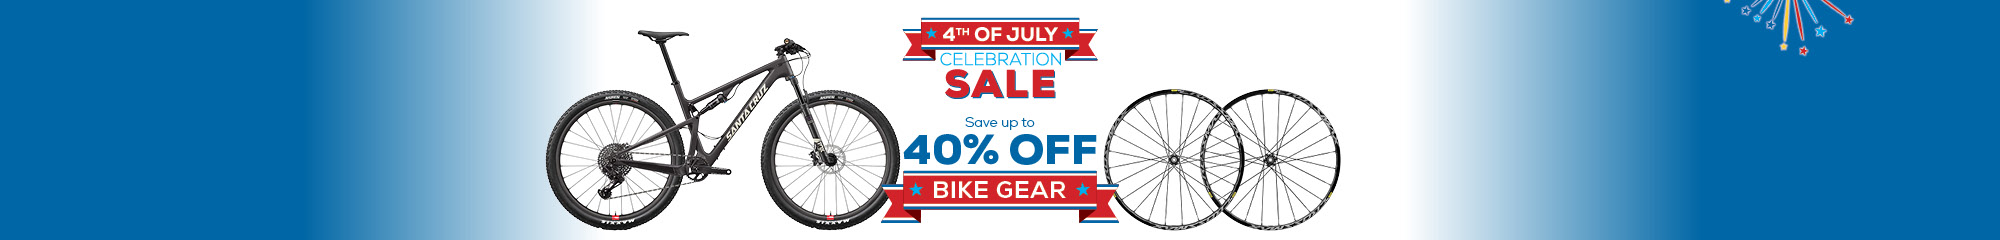 july 4th bike sale